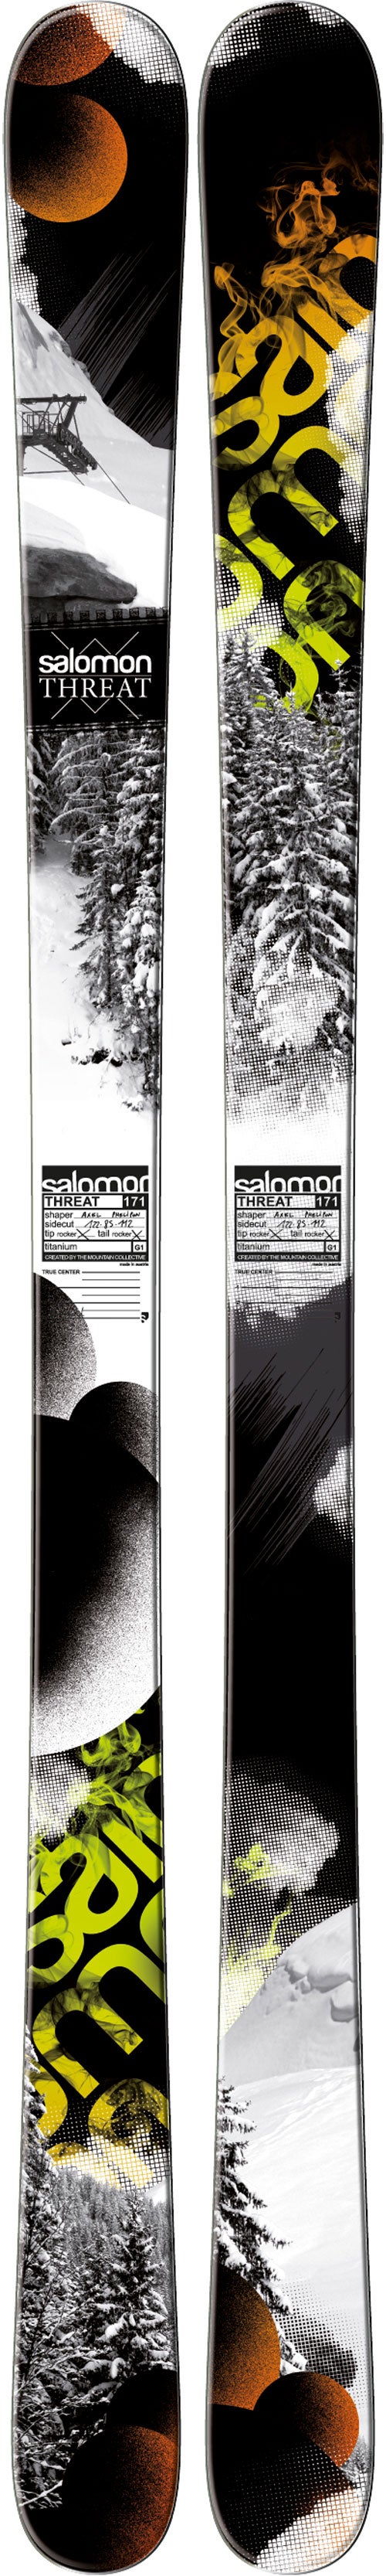 Salomon Threat (2013) Ski Mag